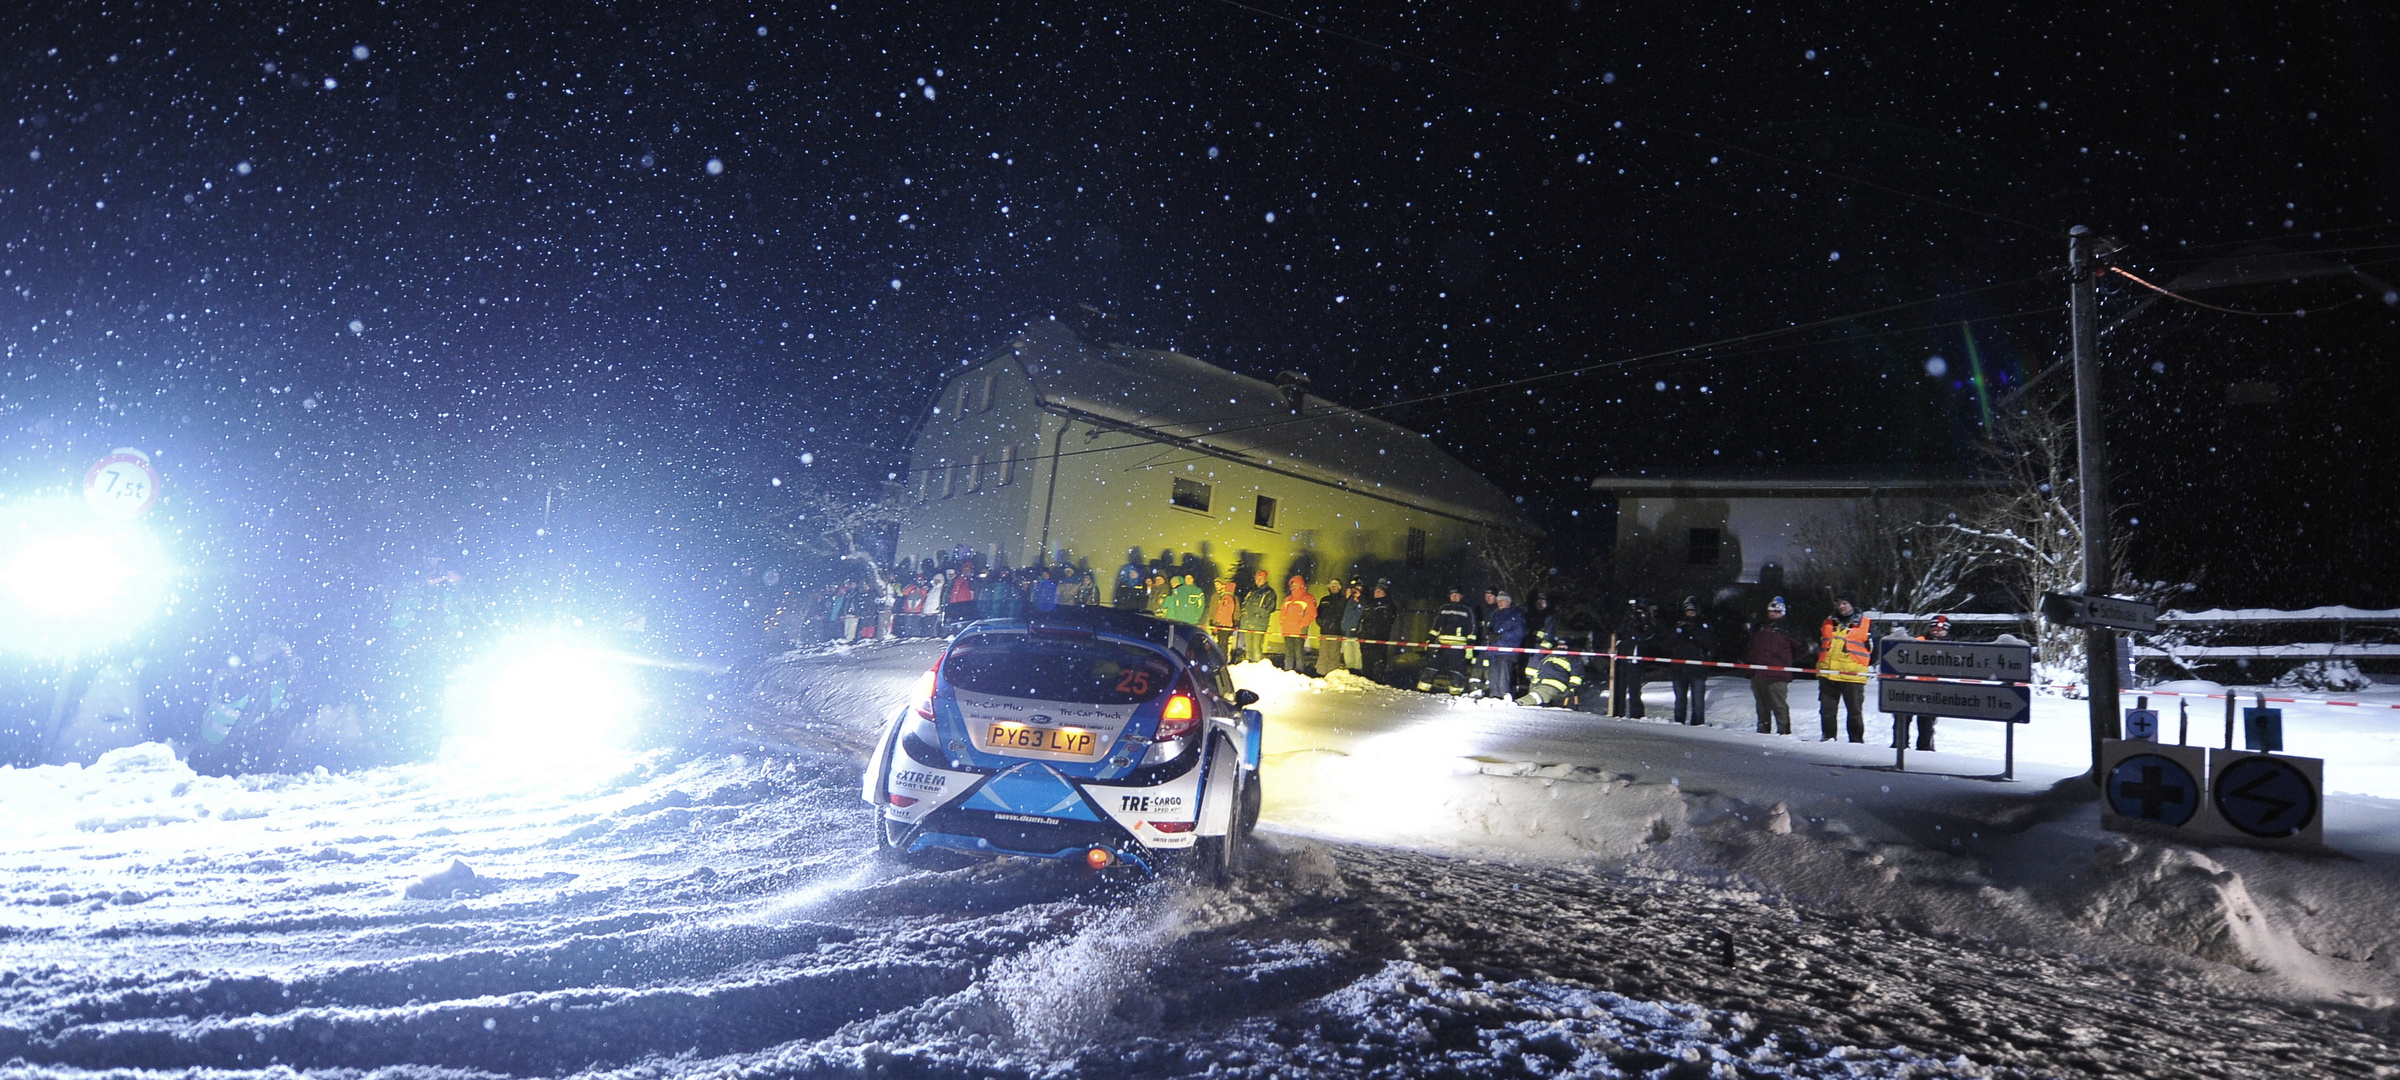 Jänner Rallye 2015 bei Nacht